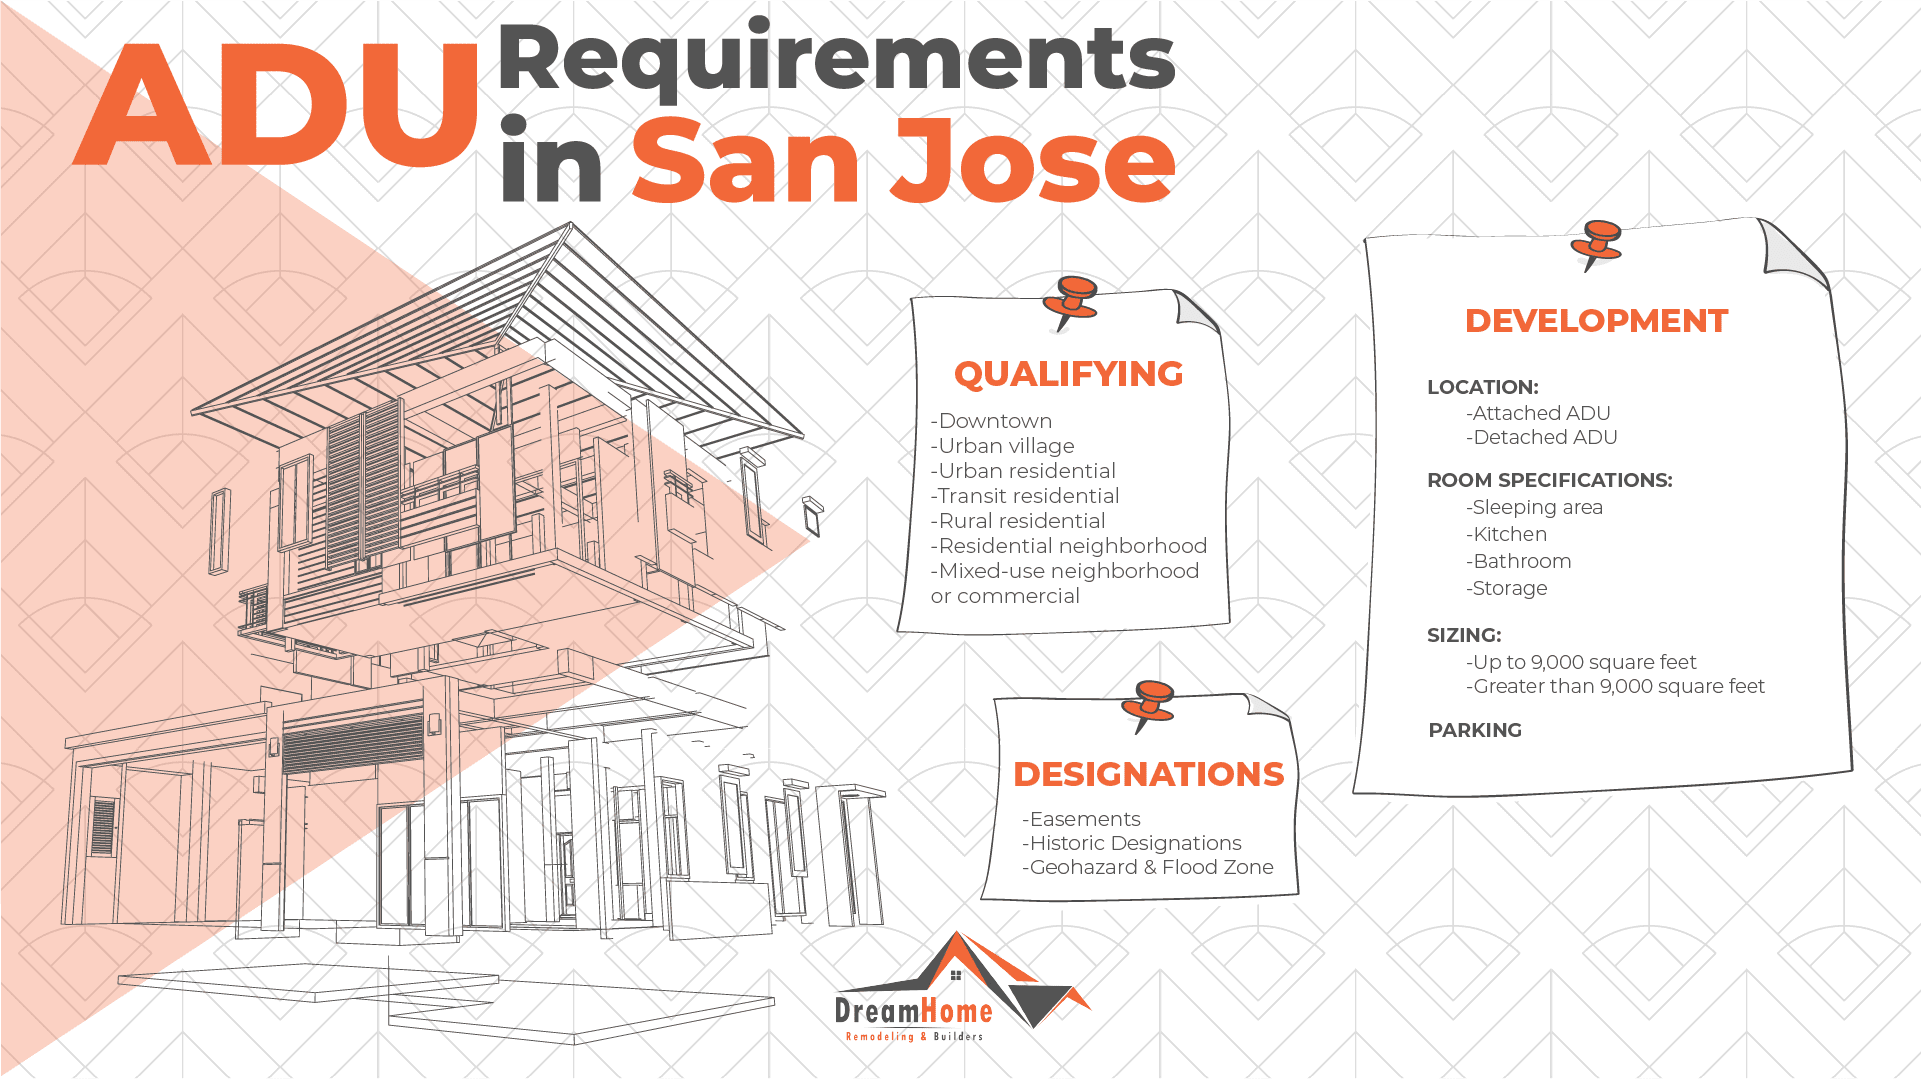 ADU Requirements in San Jose, California